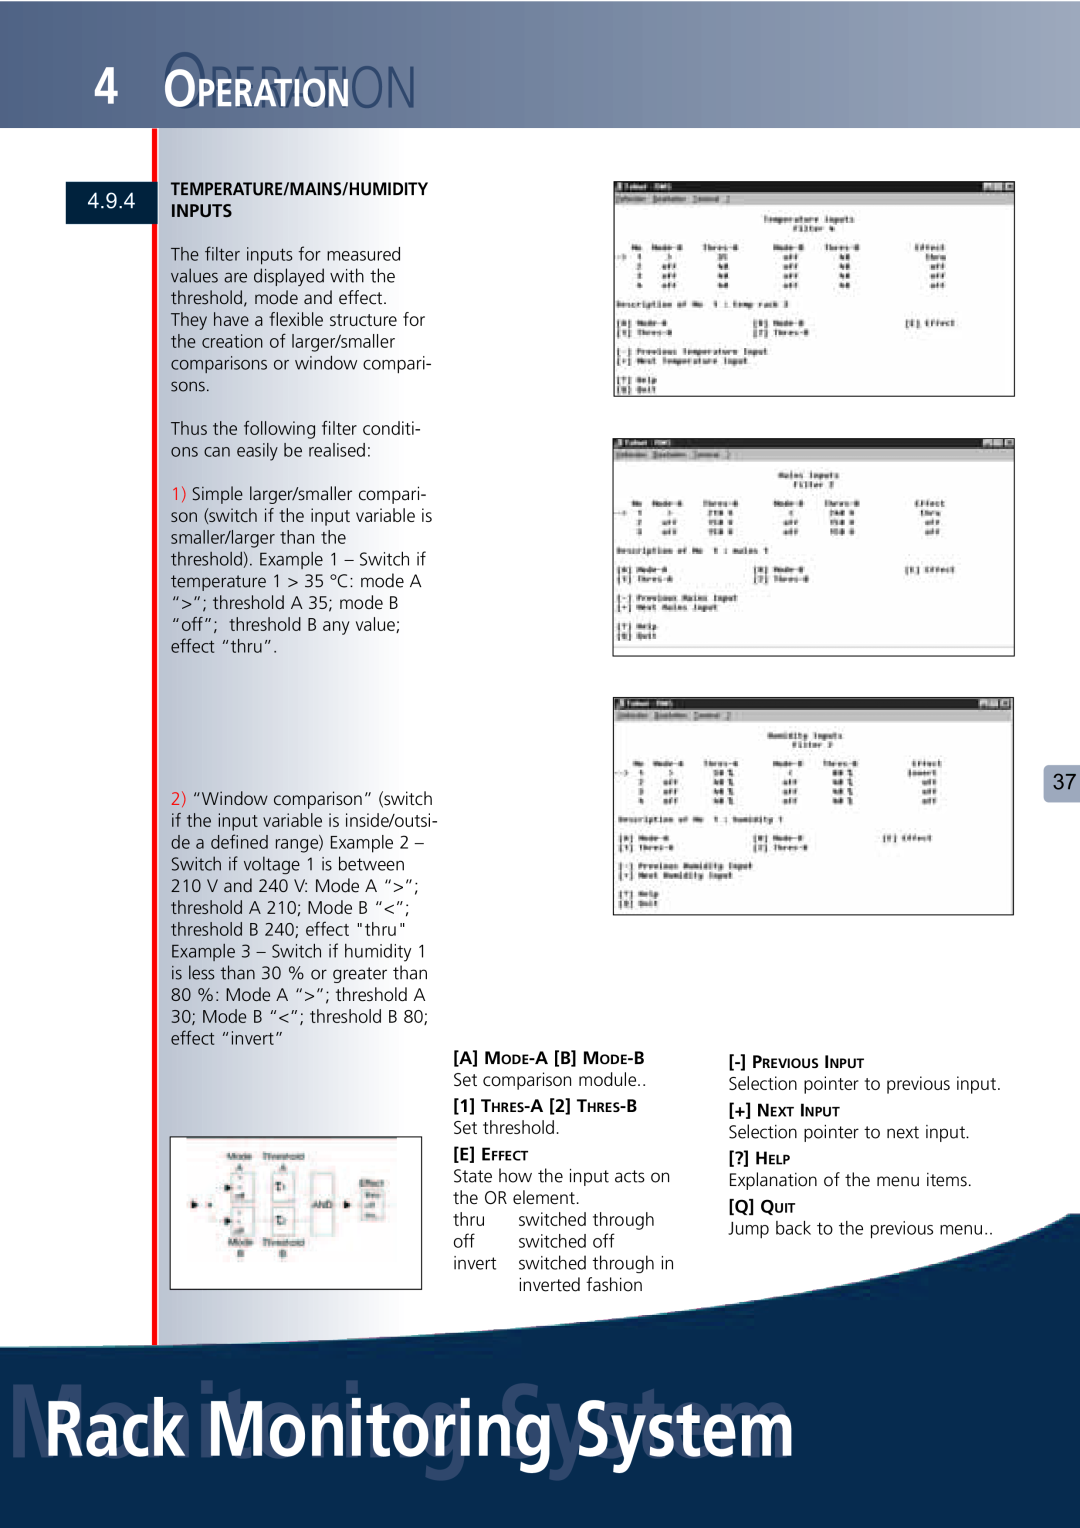 Lindy Carbon Monoxide Alarm user manual 4.9.4, MonitoringRack MonitoringSystemSystem, Ooperationperation 